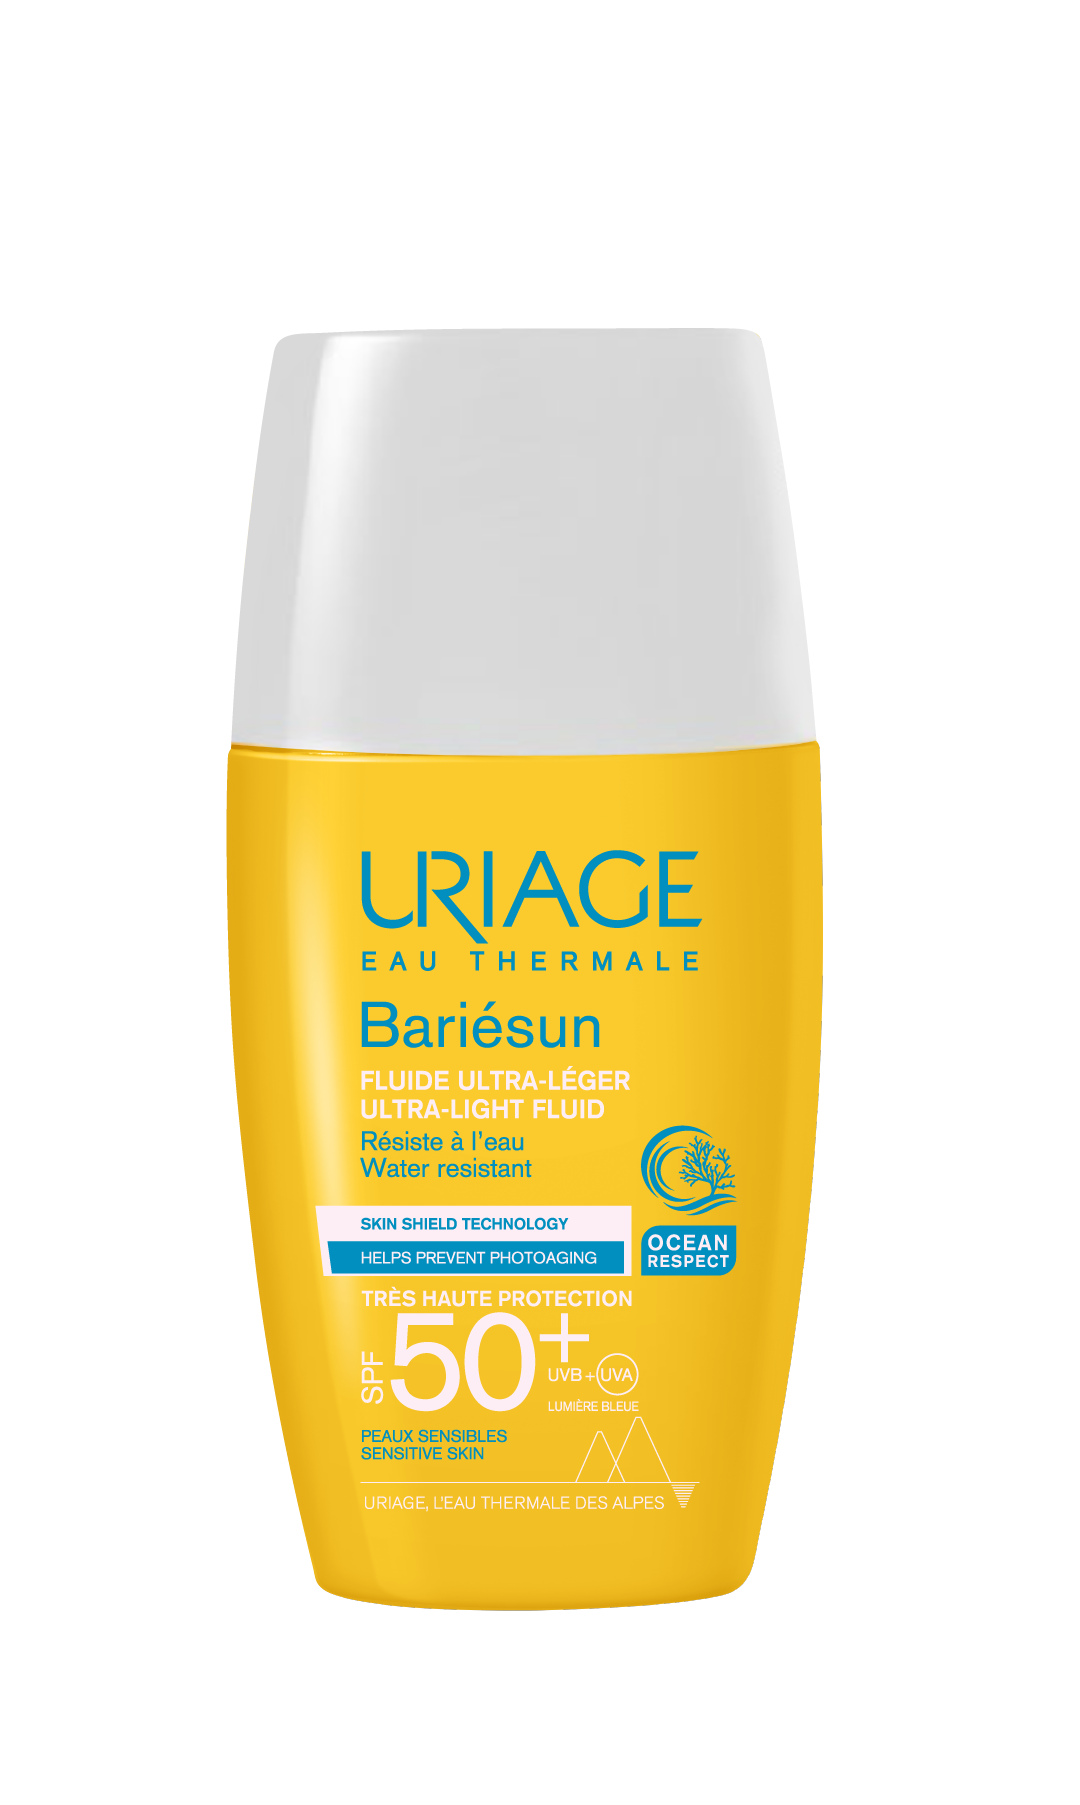 Uriage Bariesun Ultra Light Fluid SPF50 30 ml - Hassas Ciltler İçin